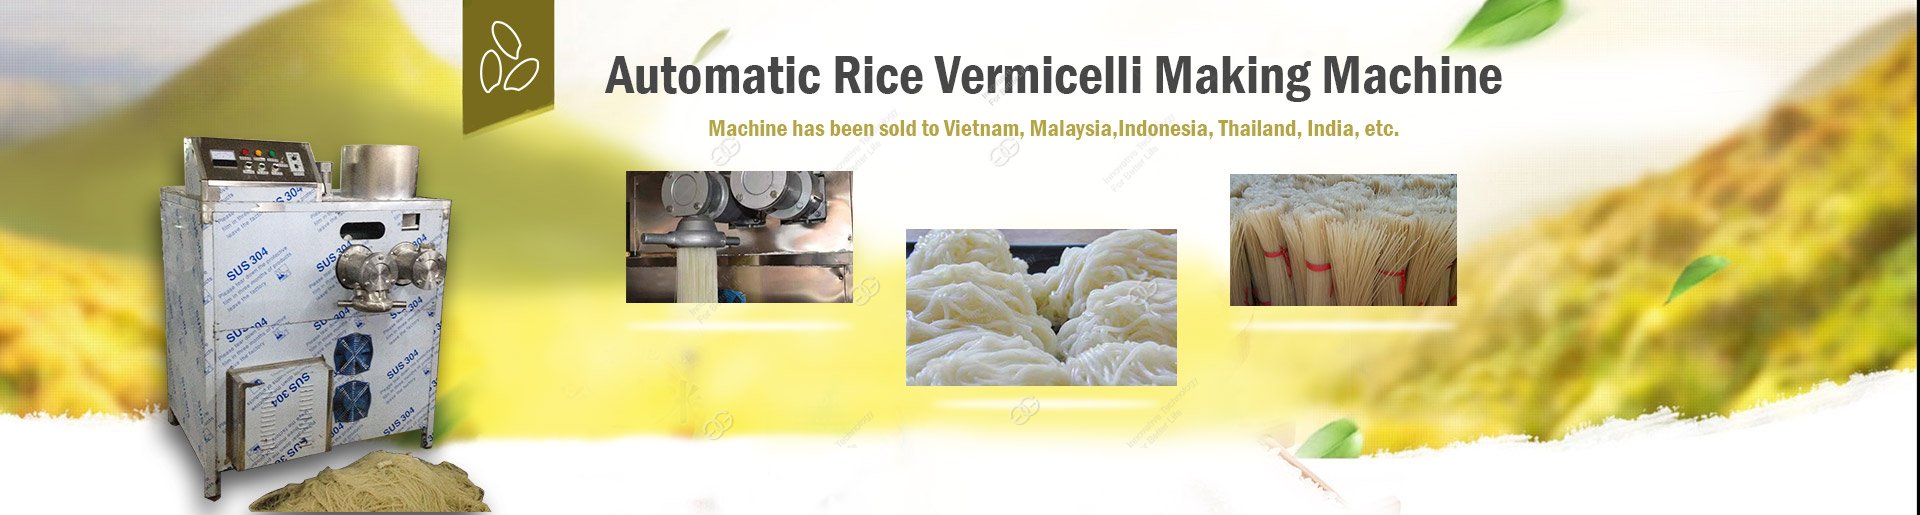 Automatic Rice Vermicelli Making Machine